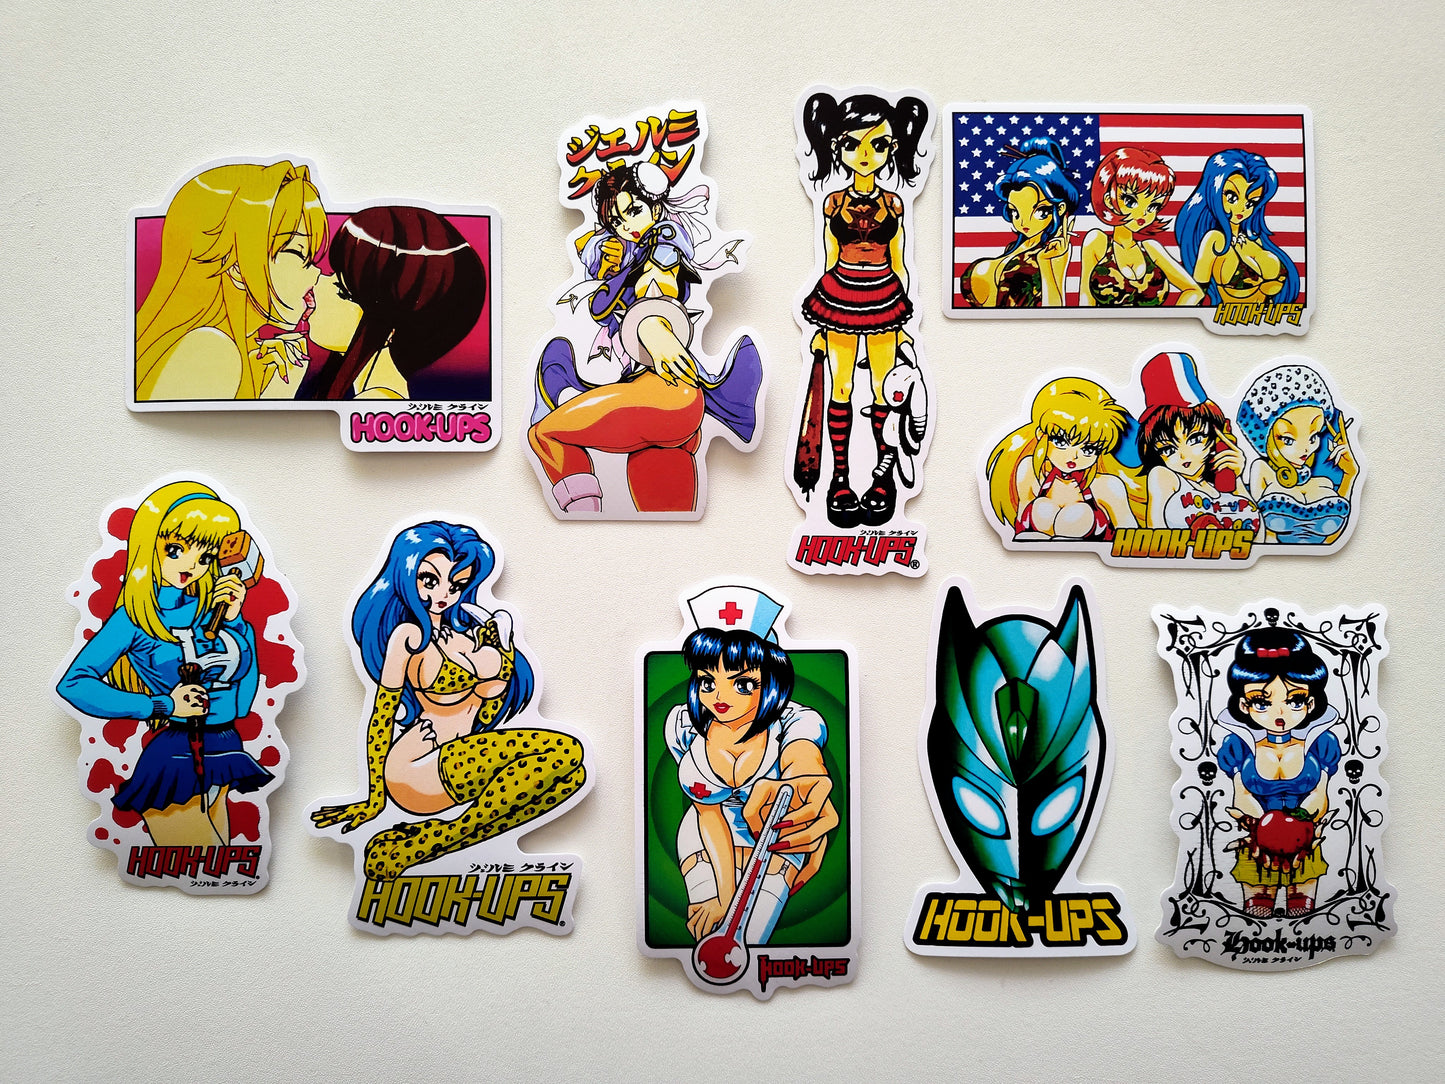 Hook-Ups Skateboards MASSIVE Anime Sticker Pack (120 Stickers)